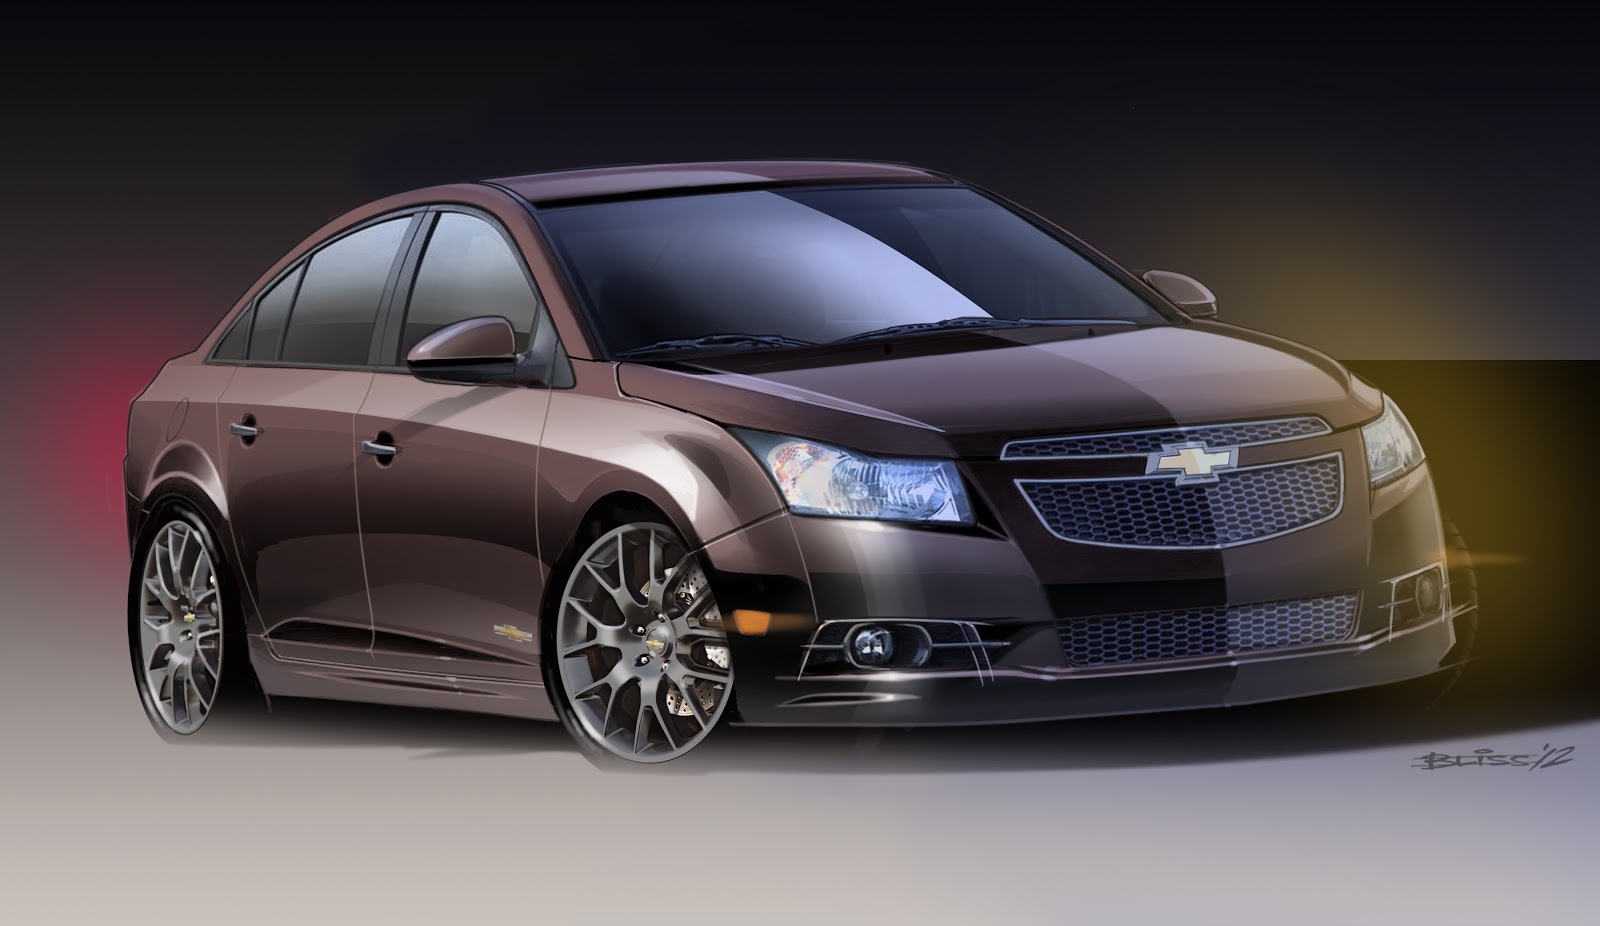 [SEMA Show] 2012 Chevrolet+Cruze+Upscale+concept+.